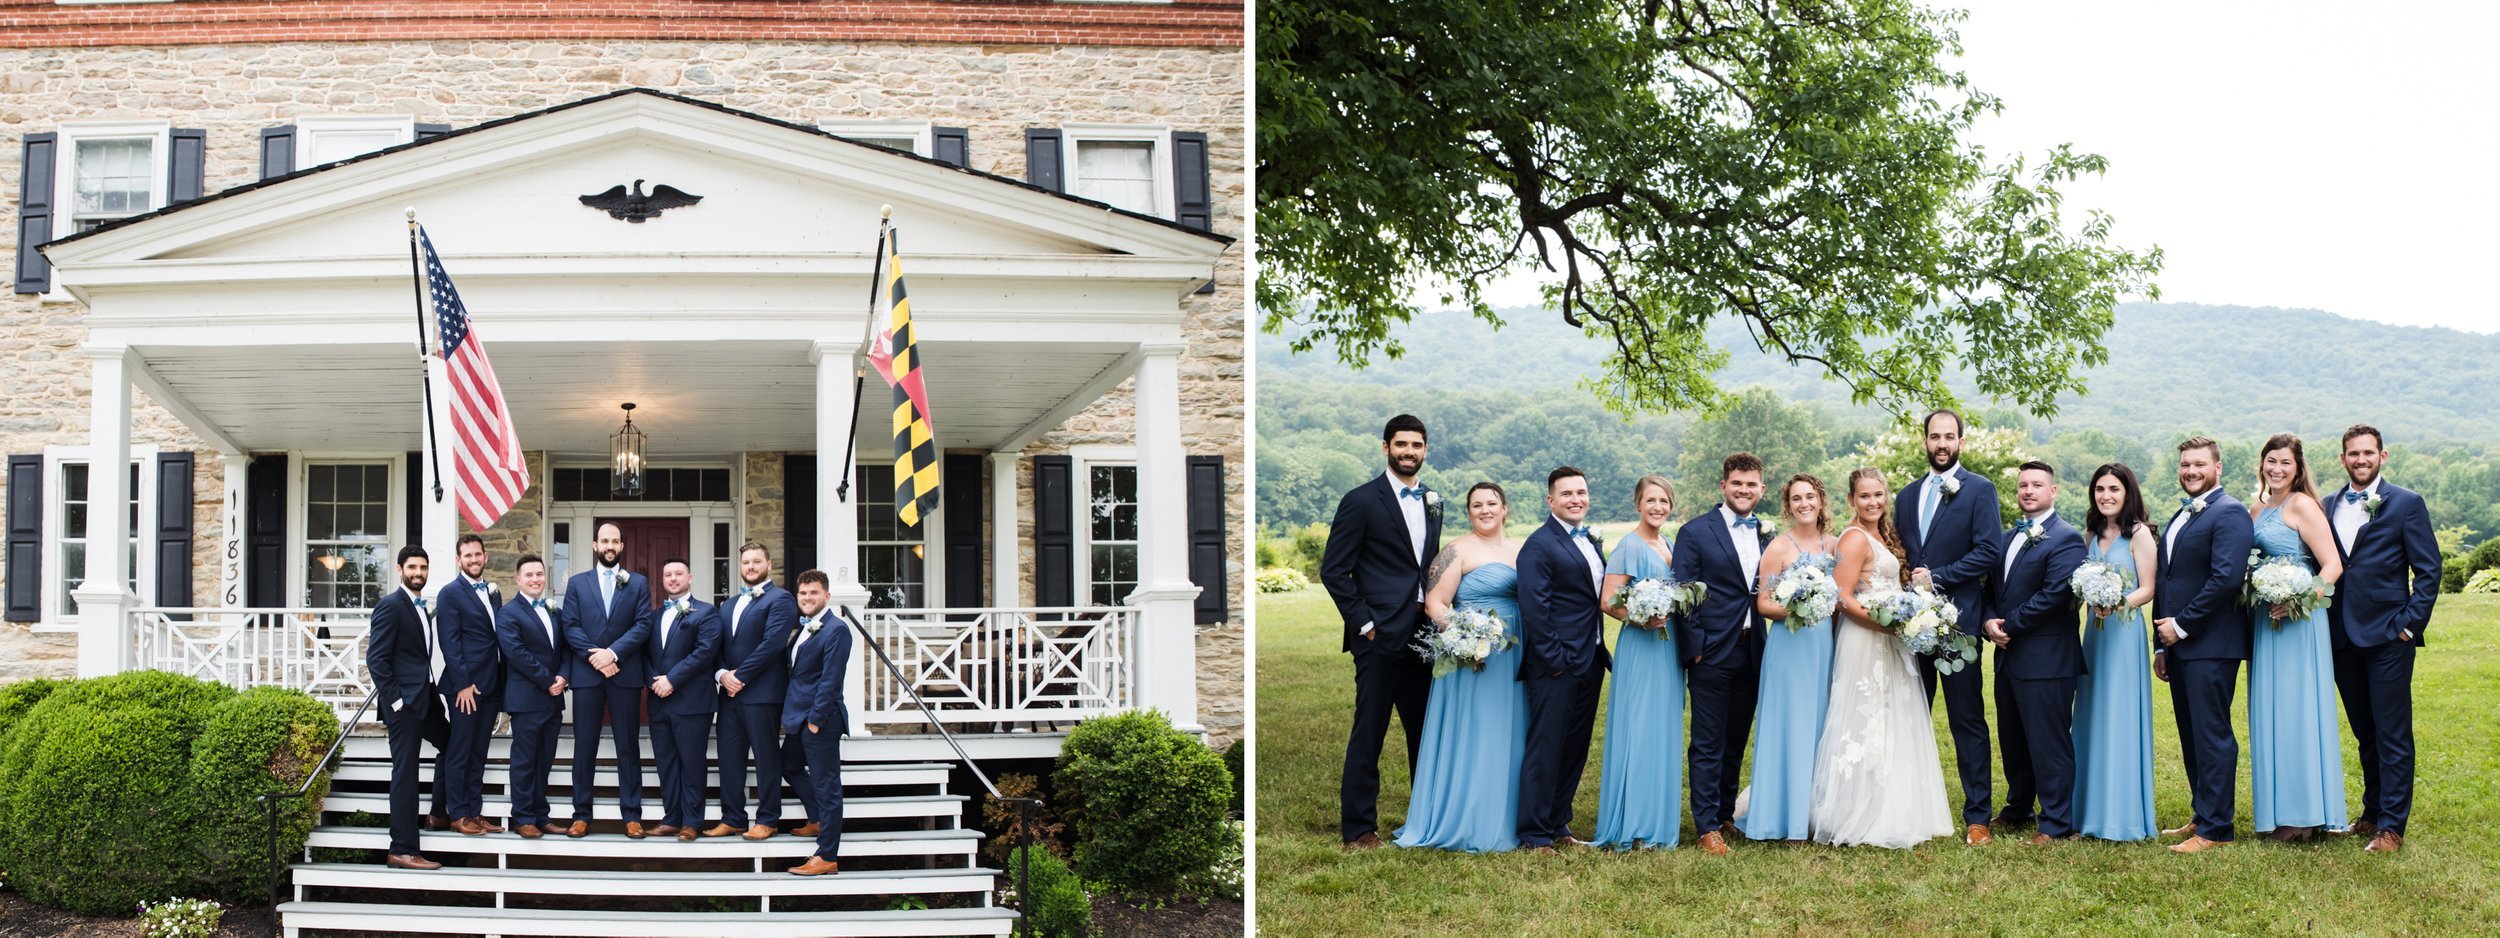 Springfield Manor wedding phototgraphy16.jpg